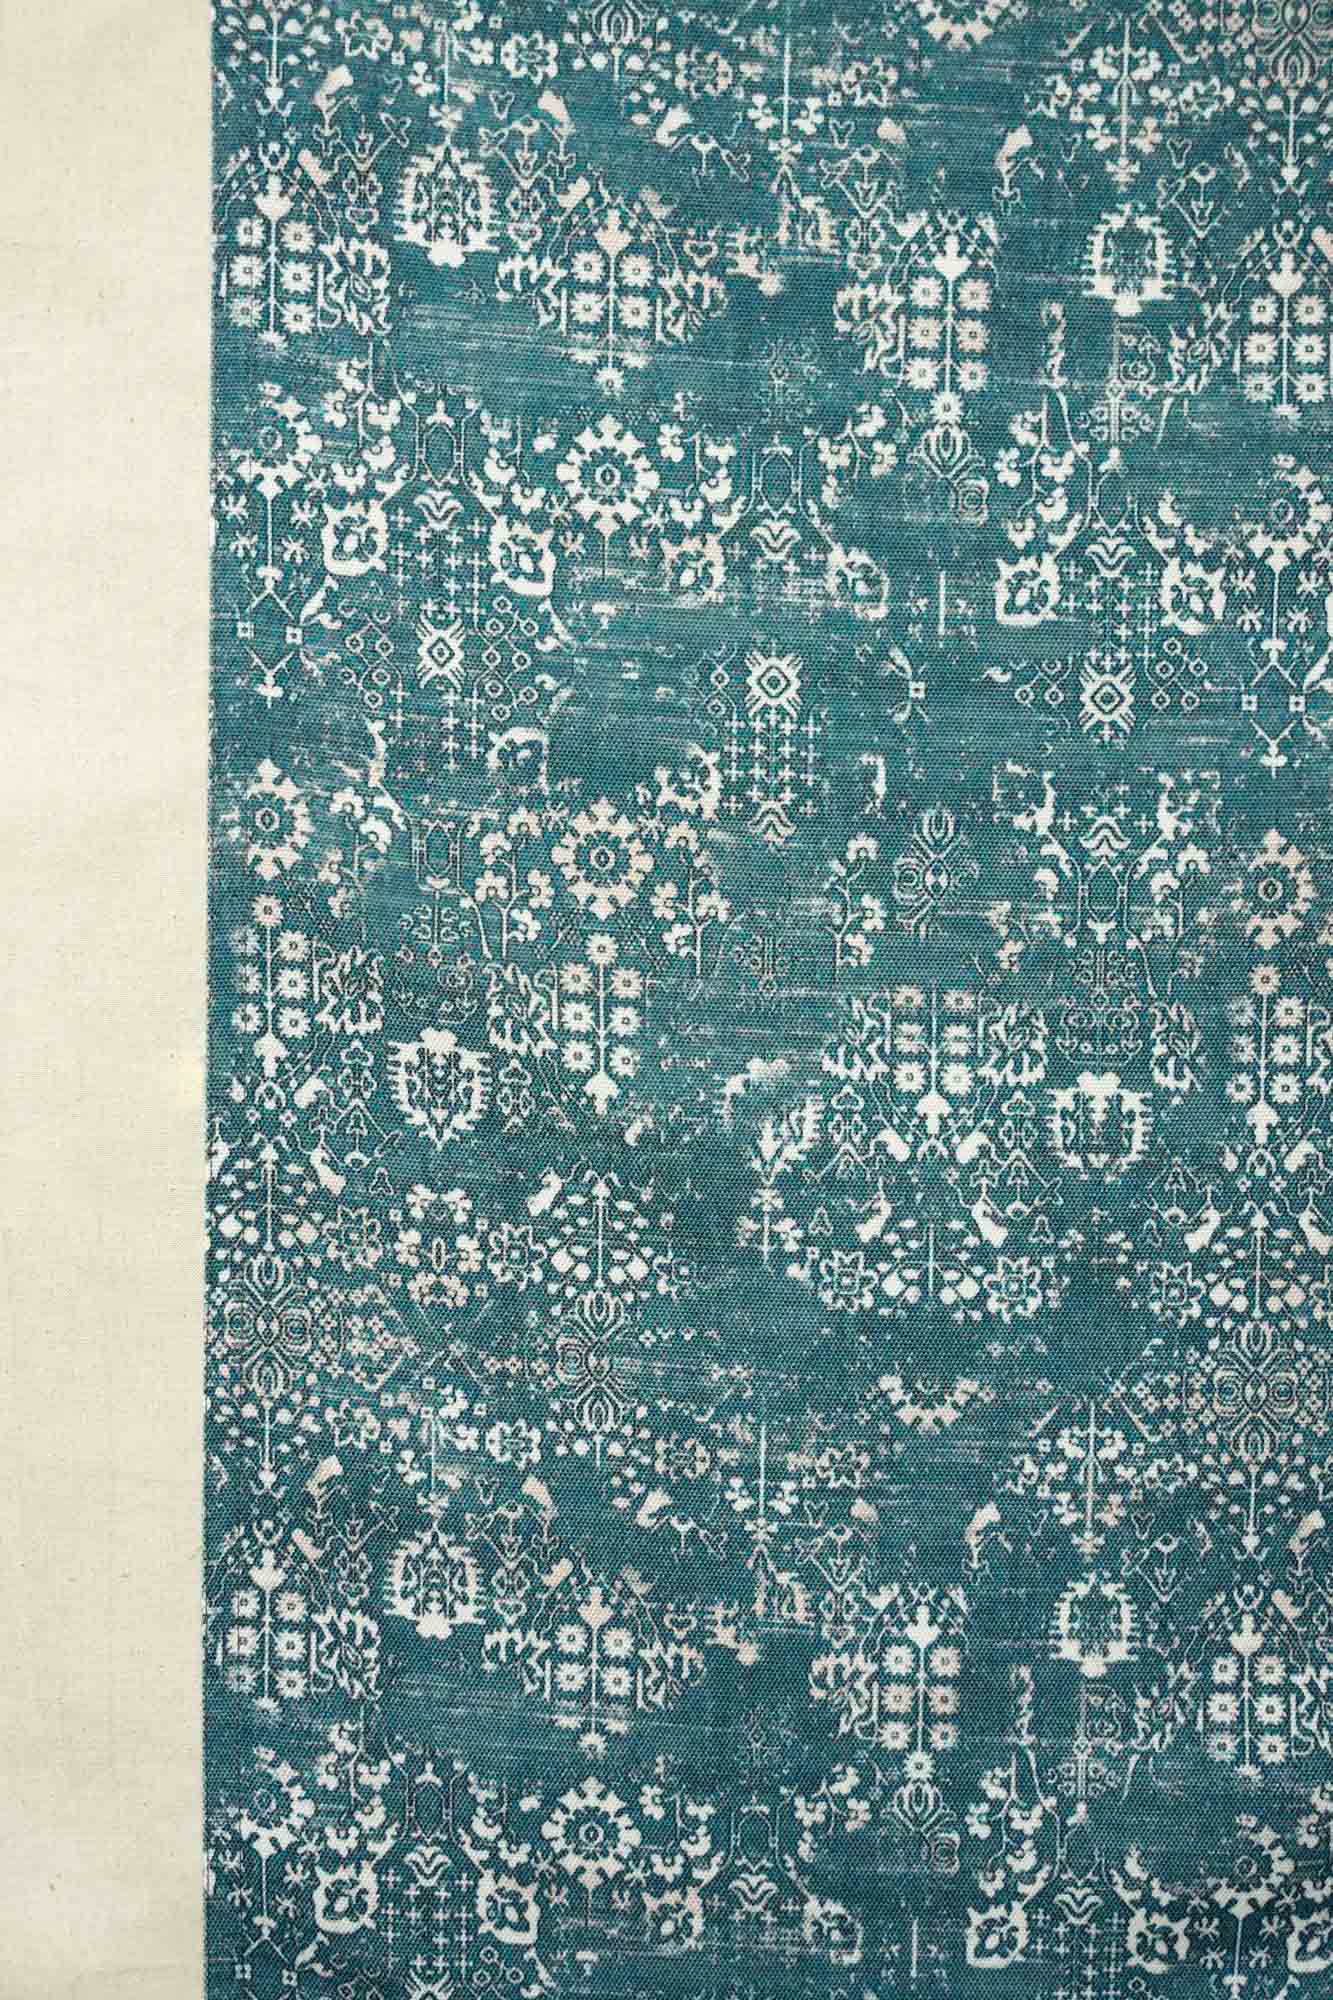 Printed Elegance -  Cotton Table Runner with Digital Design